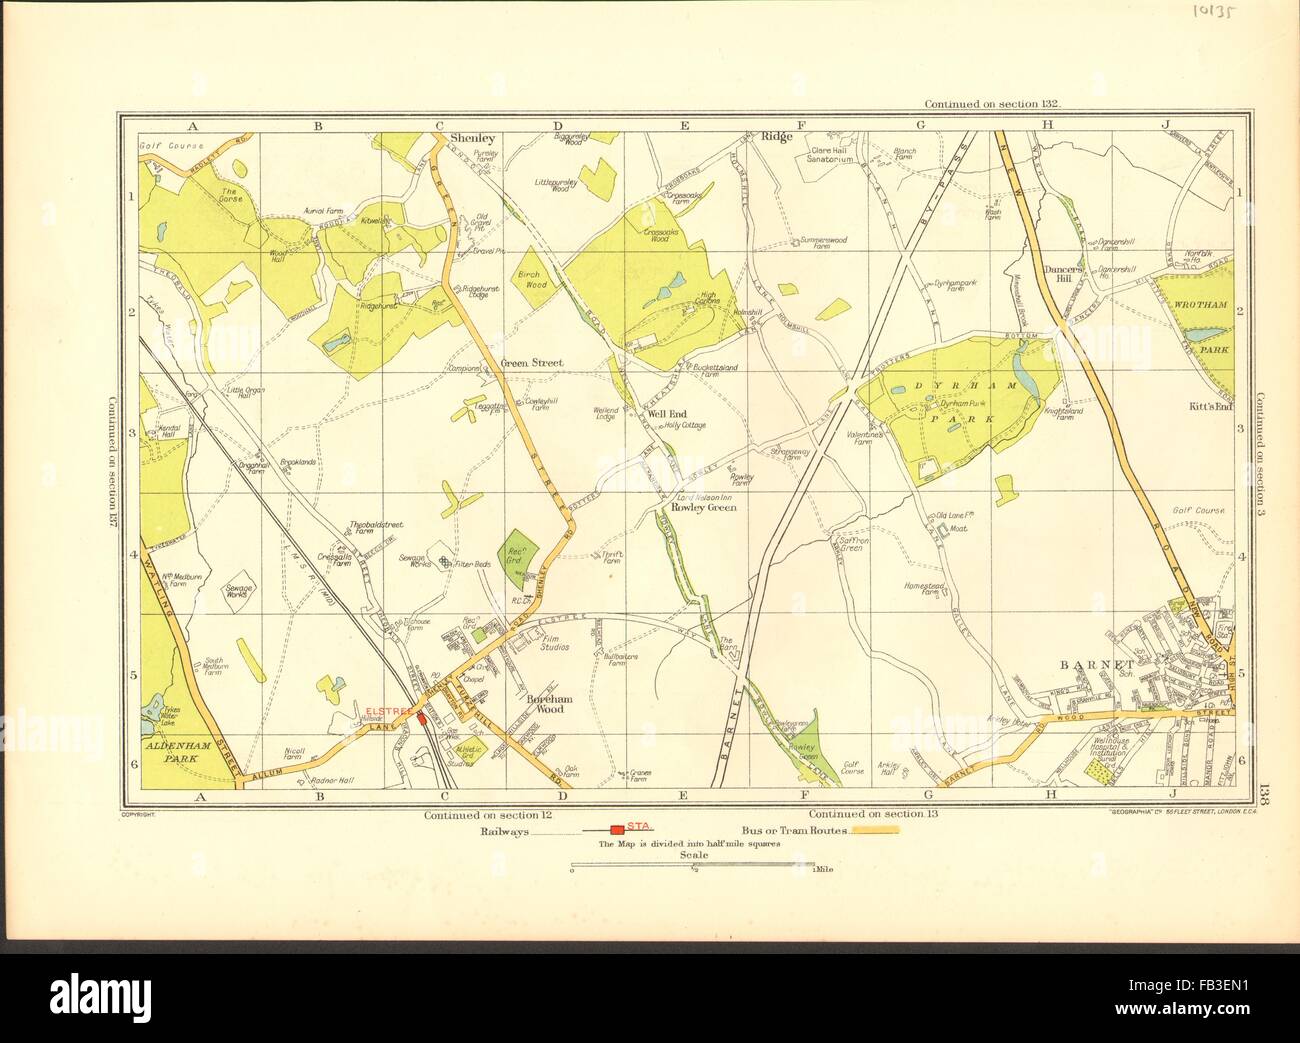 BOREHAMWOOD: Elstree, Barnet, Shenley, Ridge, Monken Hadley, 1937 vintage map Stock Photo